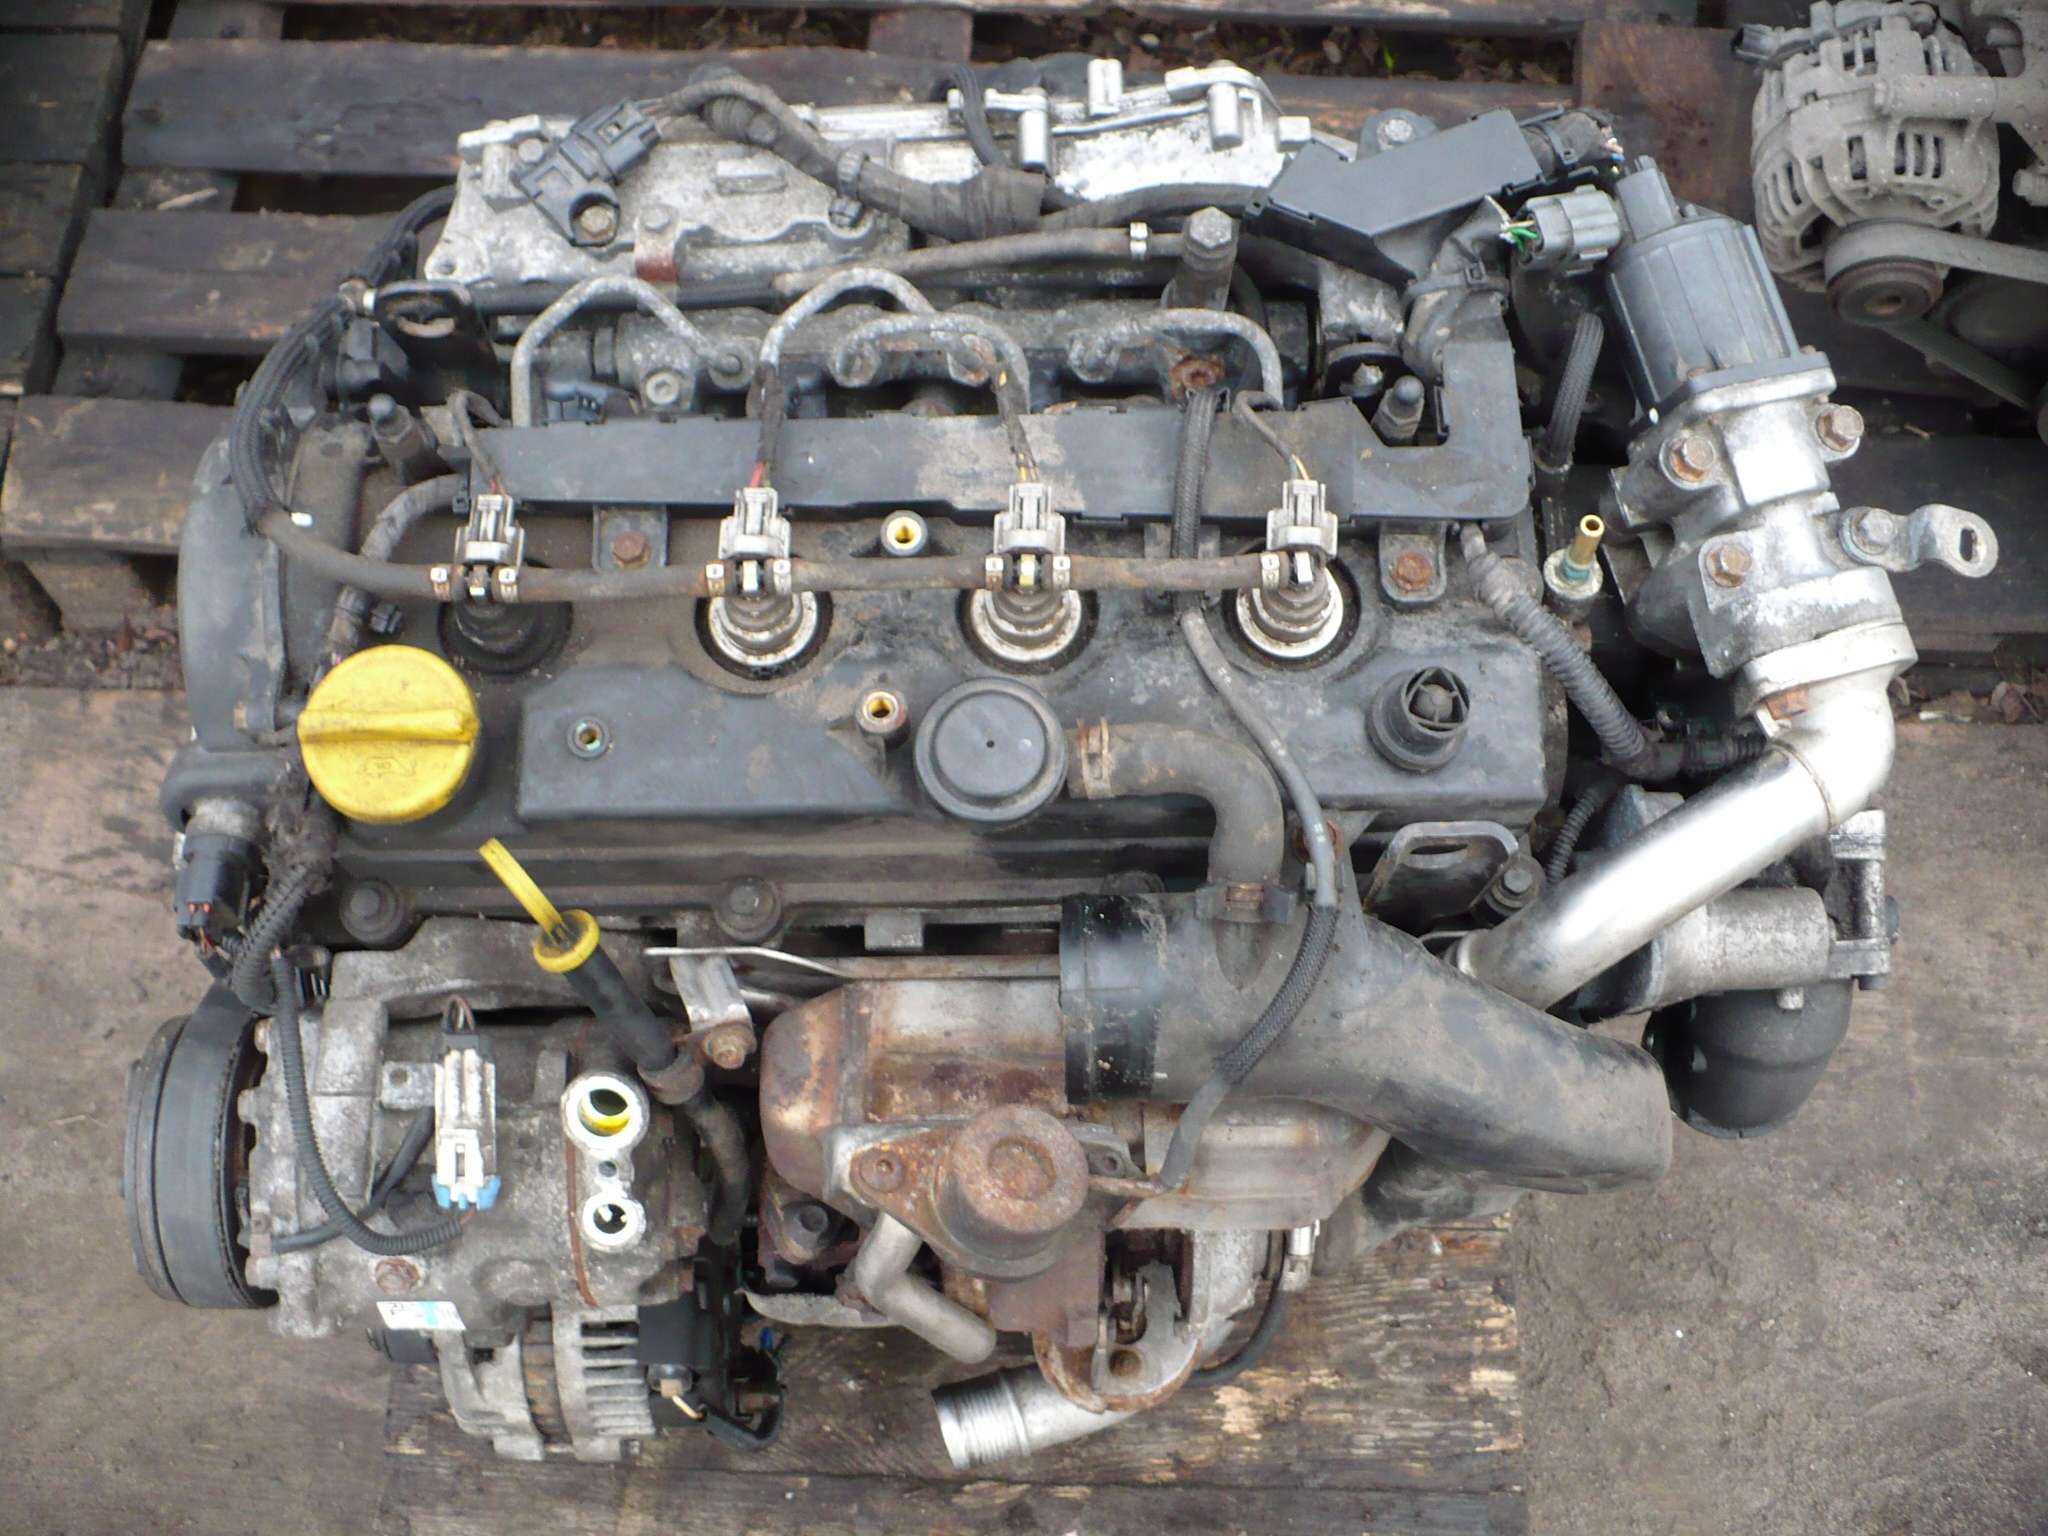 Z18xer- двигатель opel astra